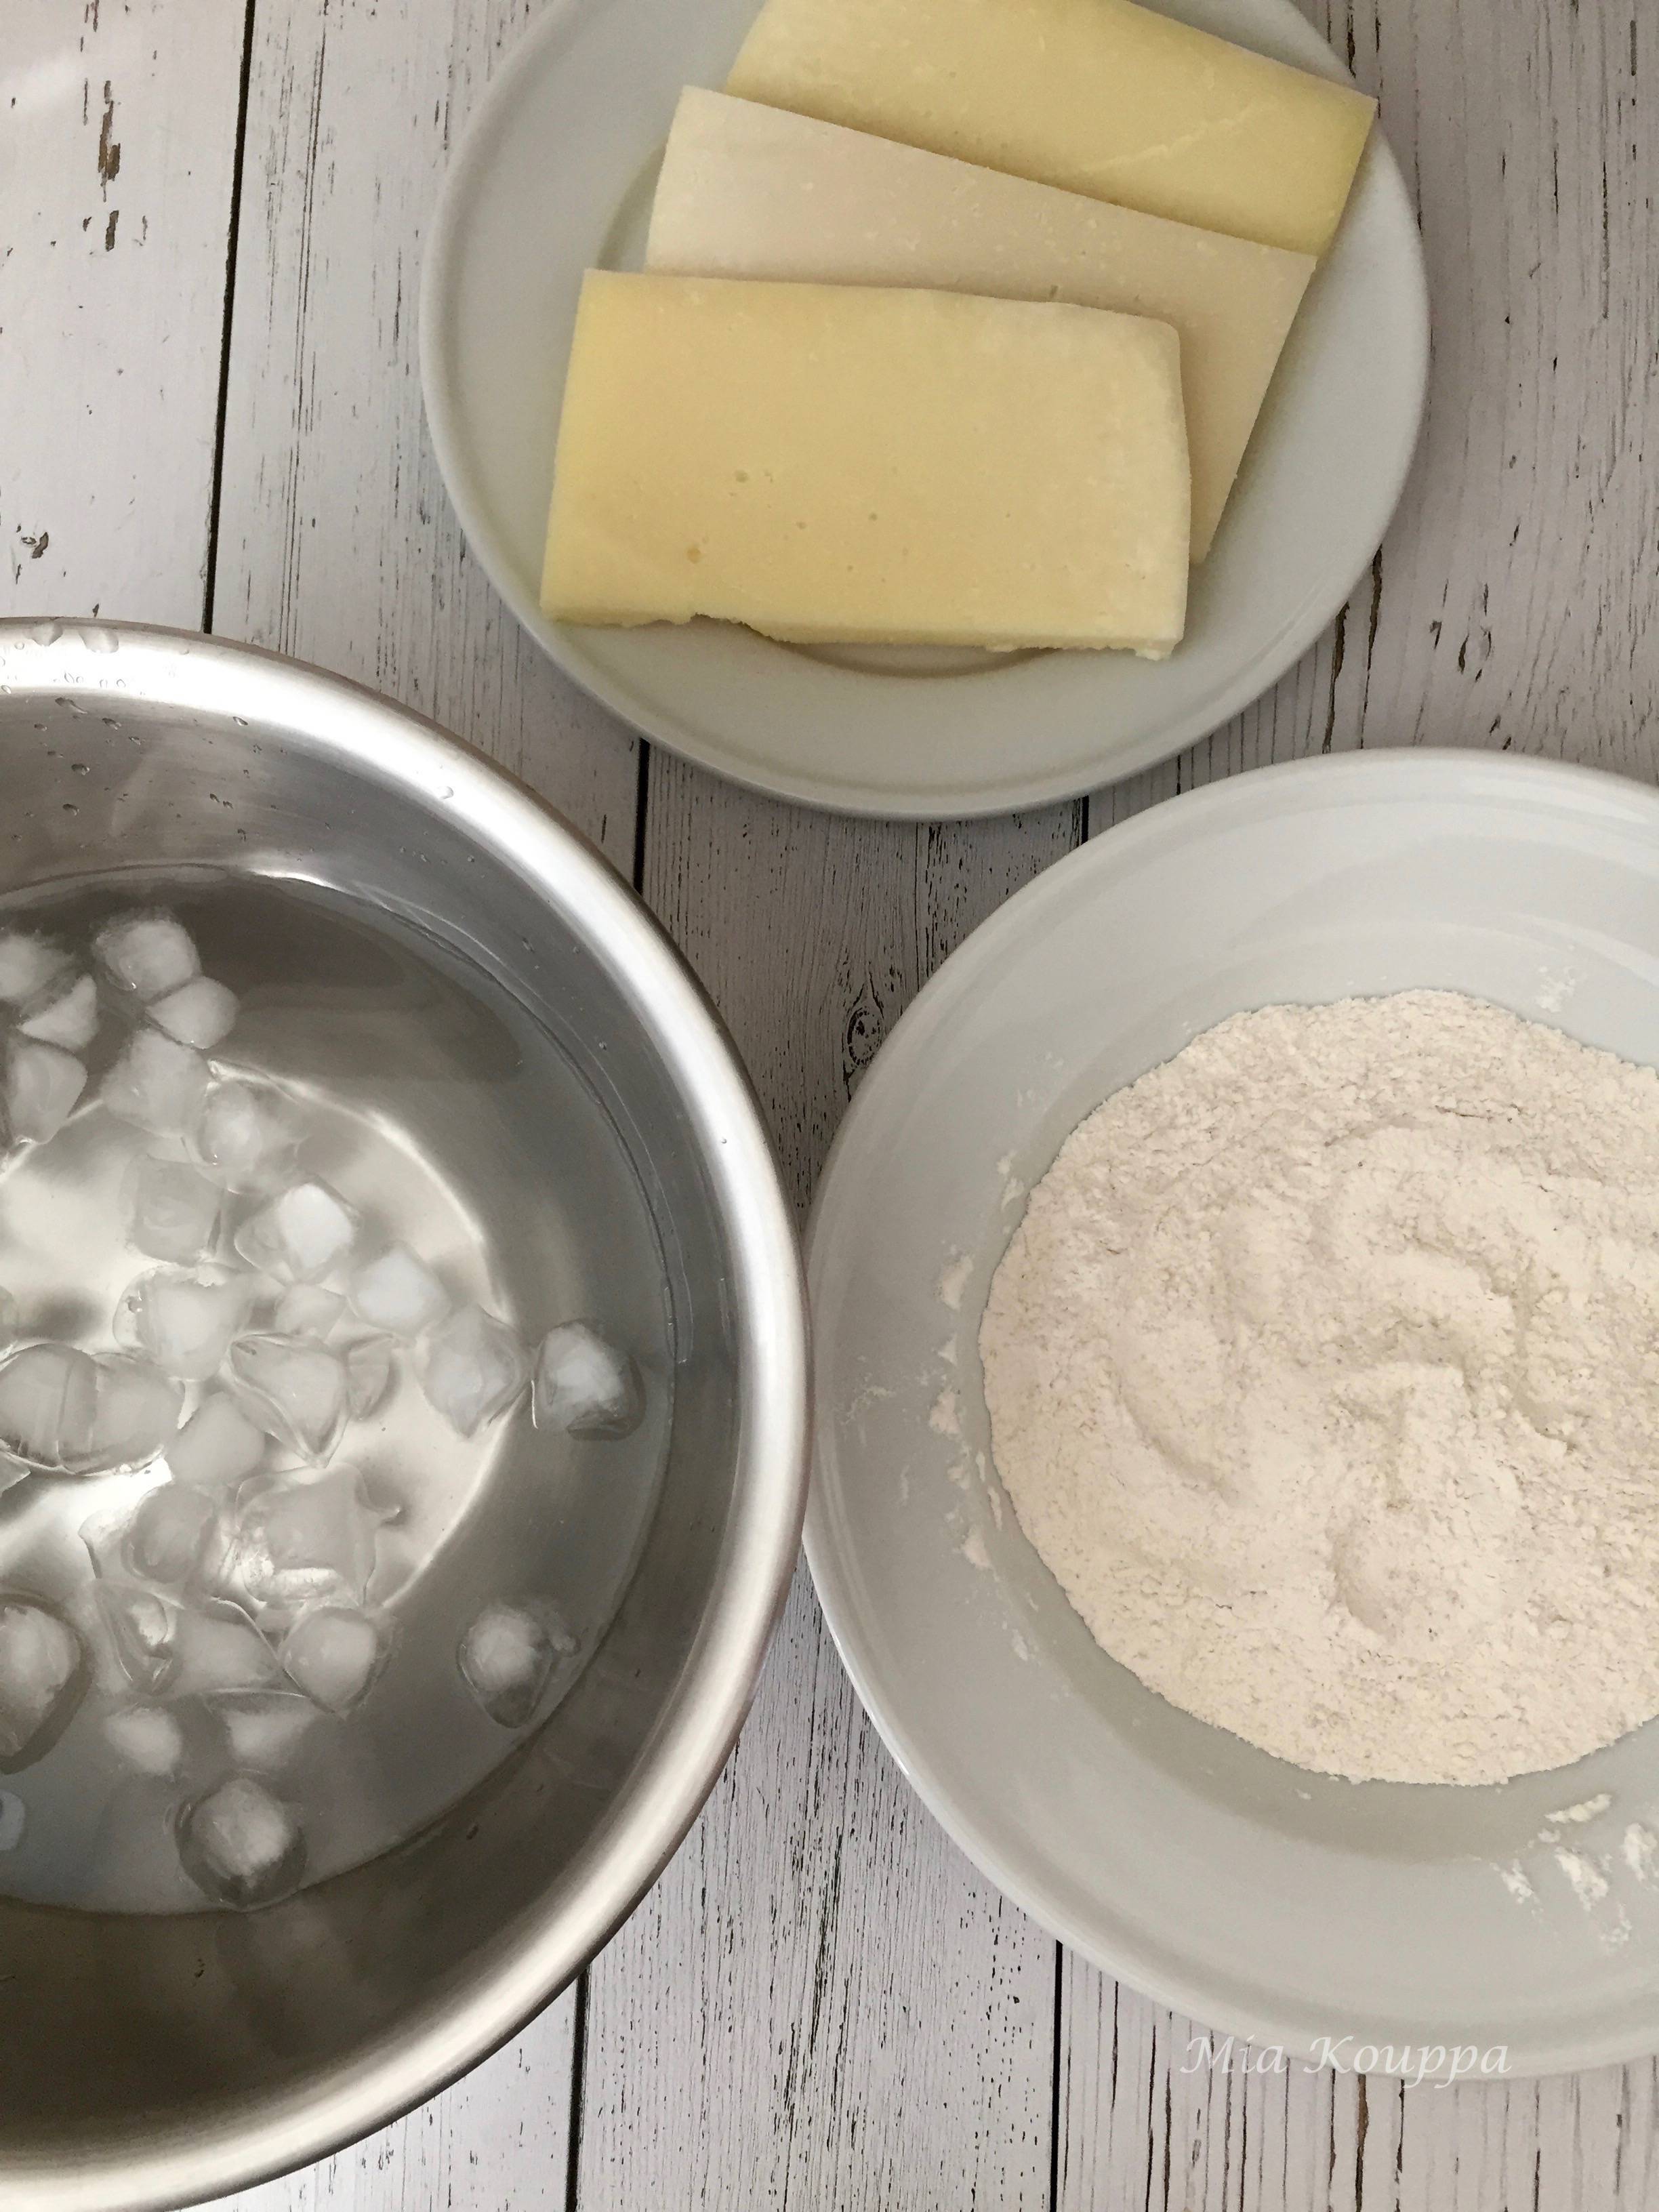 Prepping to make cheese saganaki